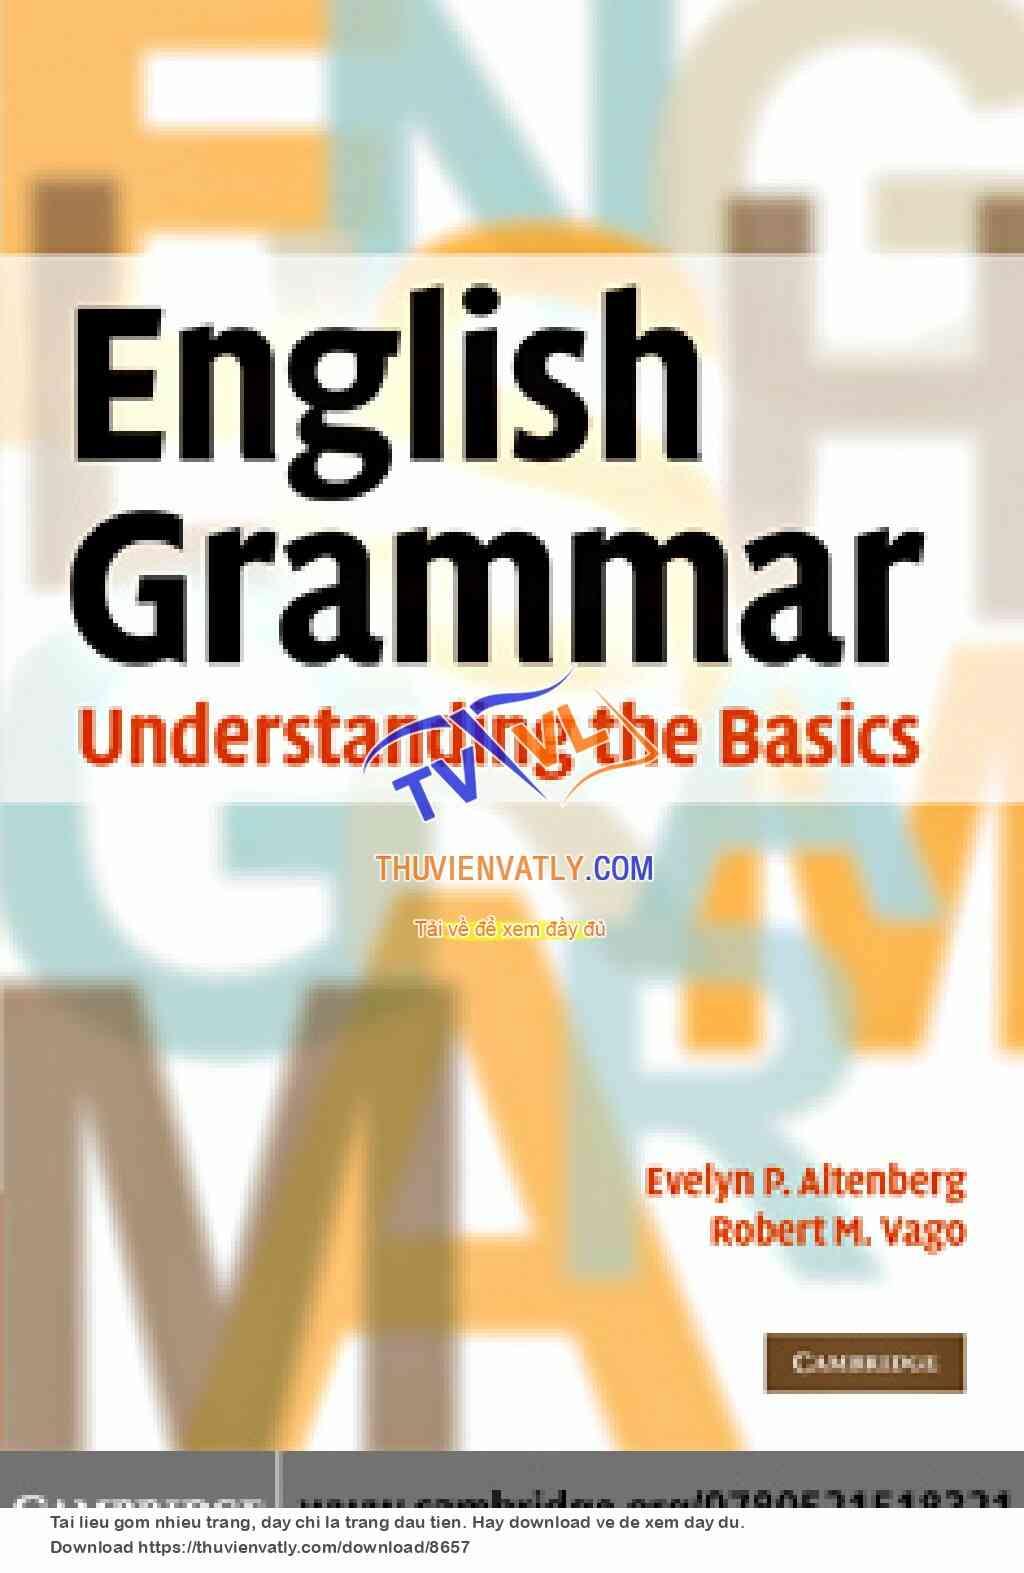 English Grammar Understanding Basics